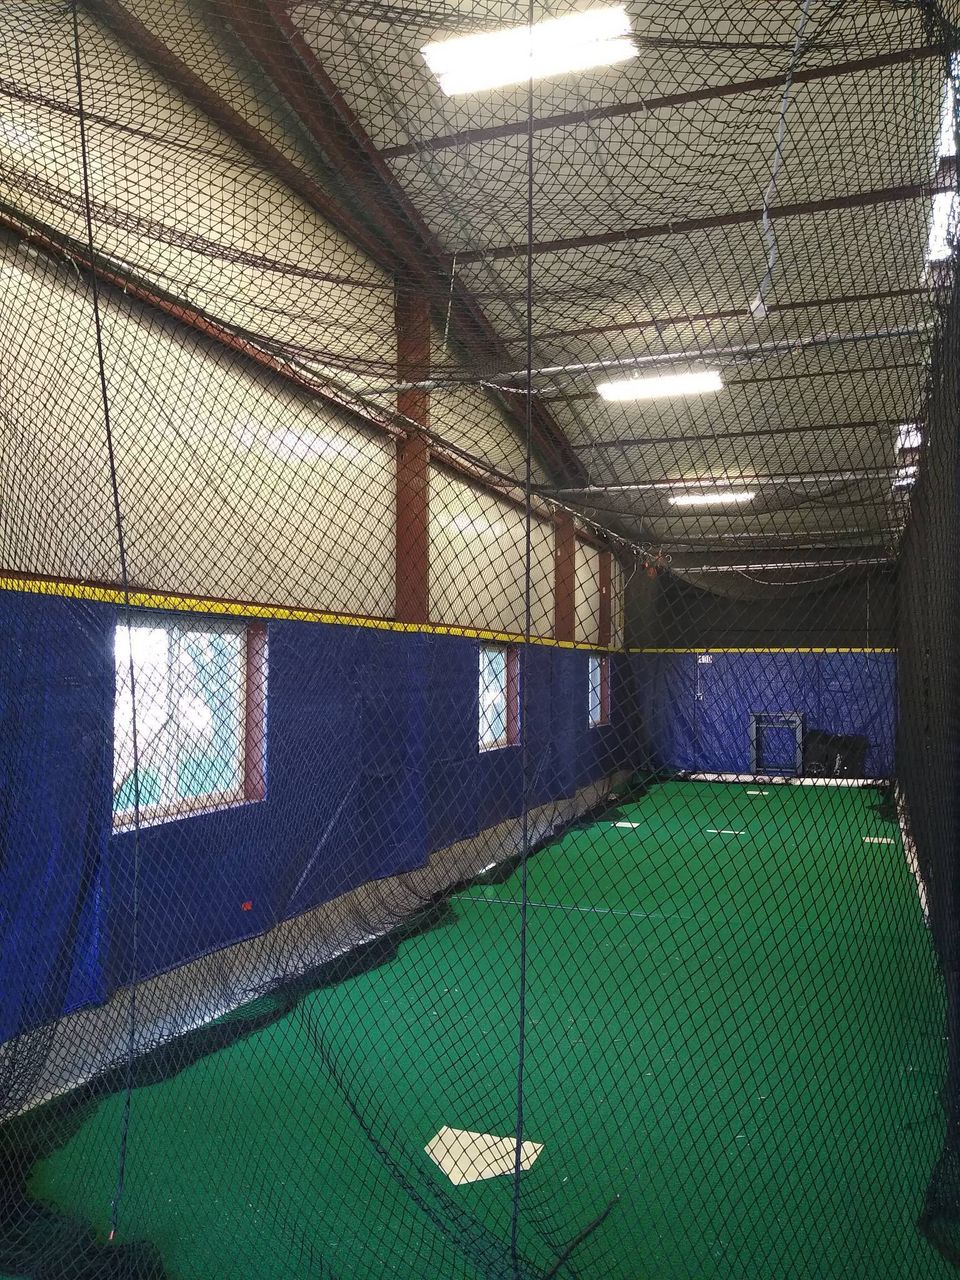 Club hitting indoor hitting cage nets